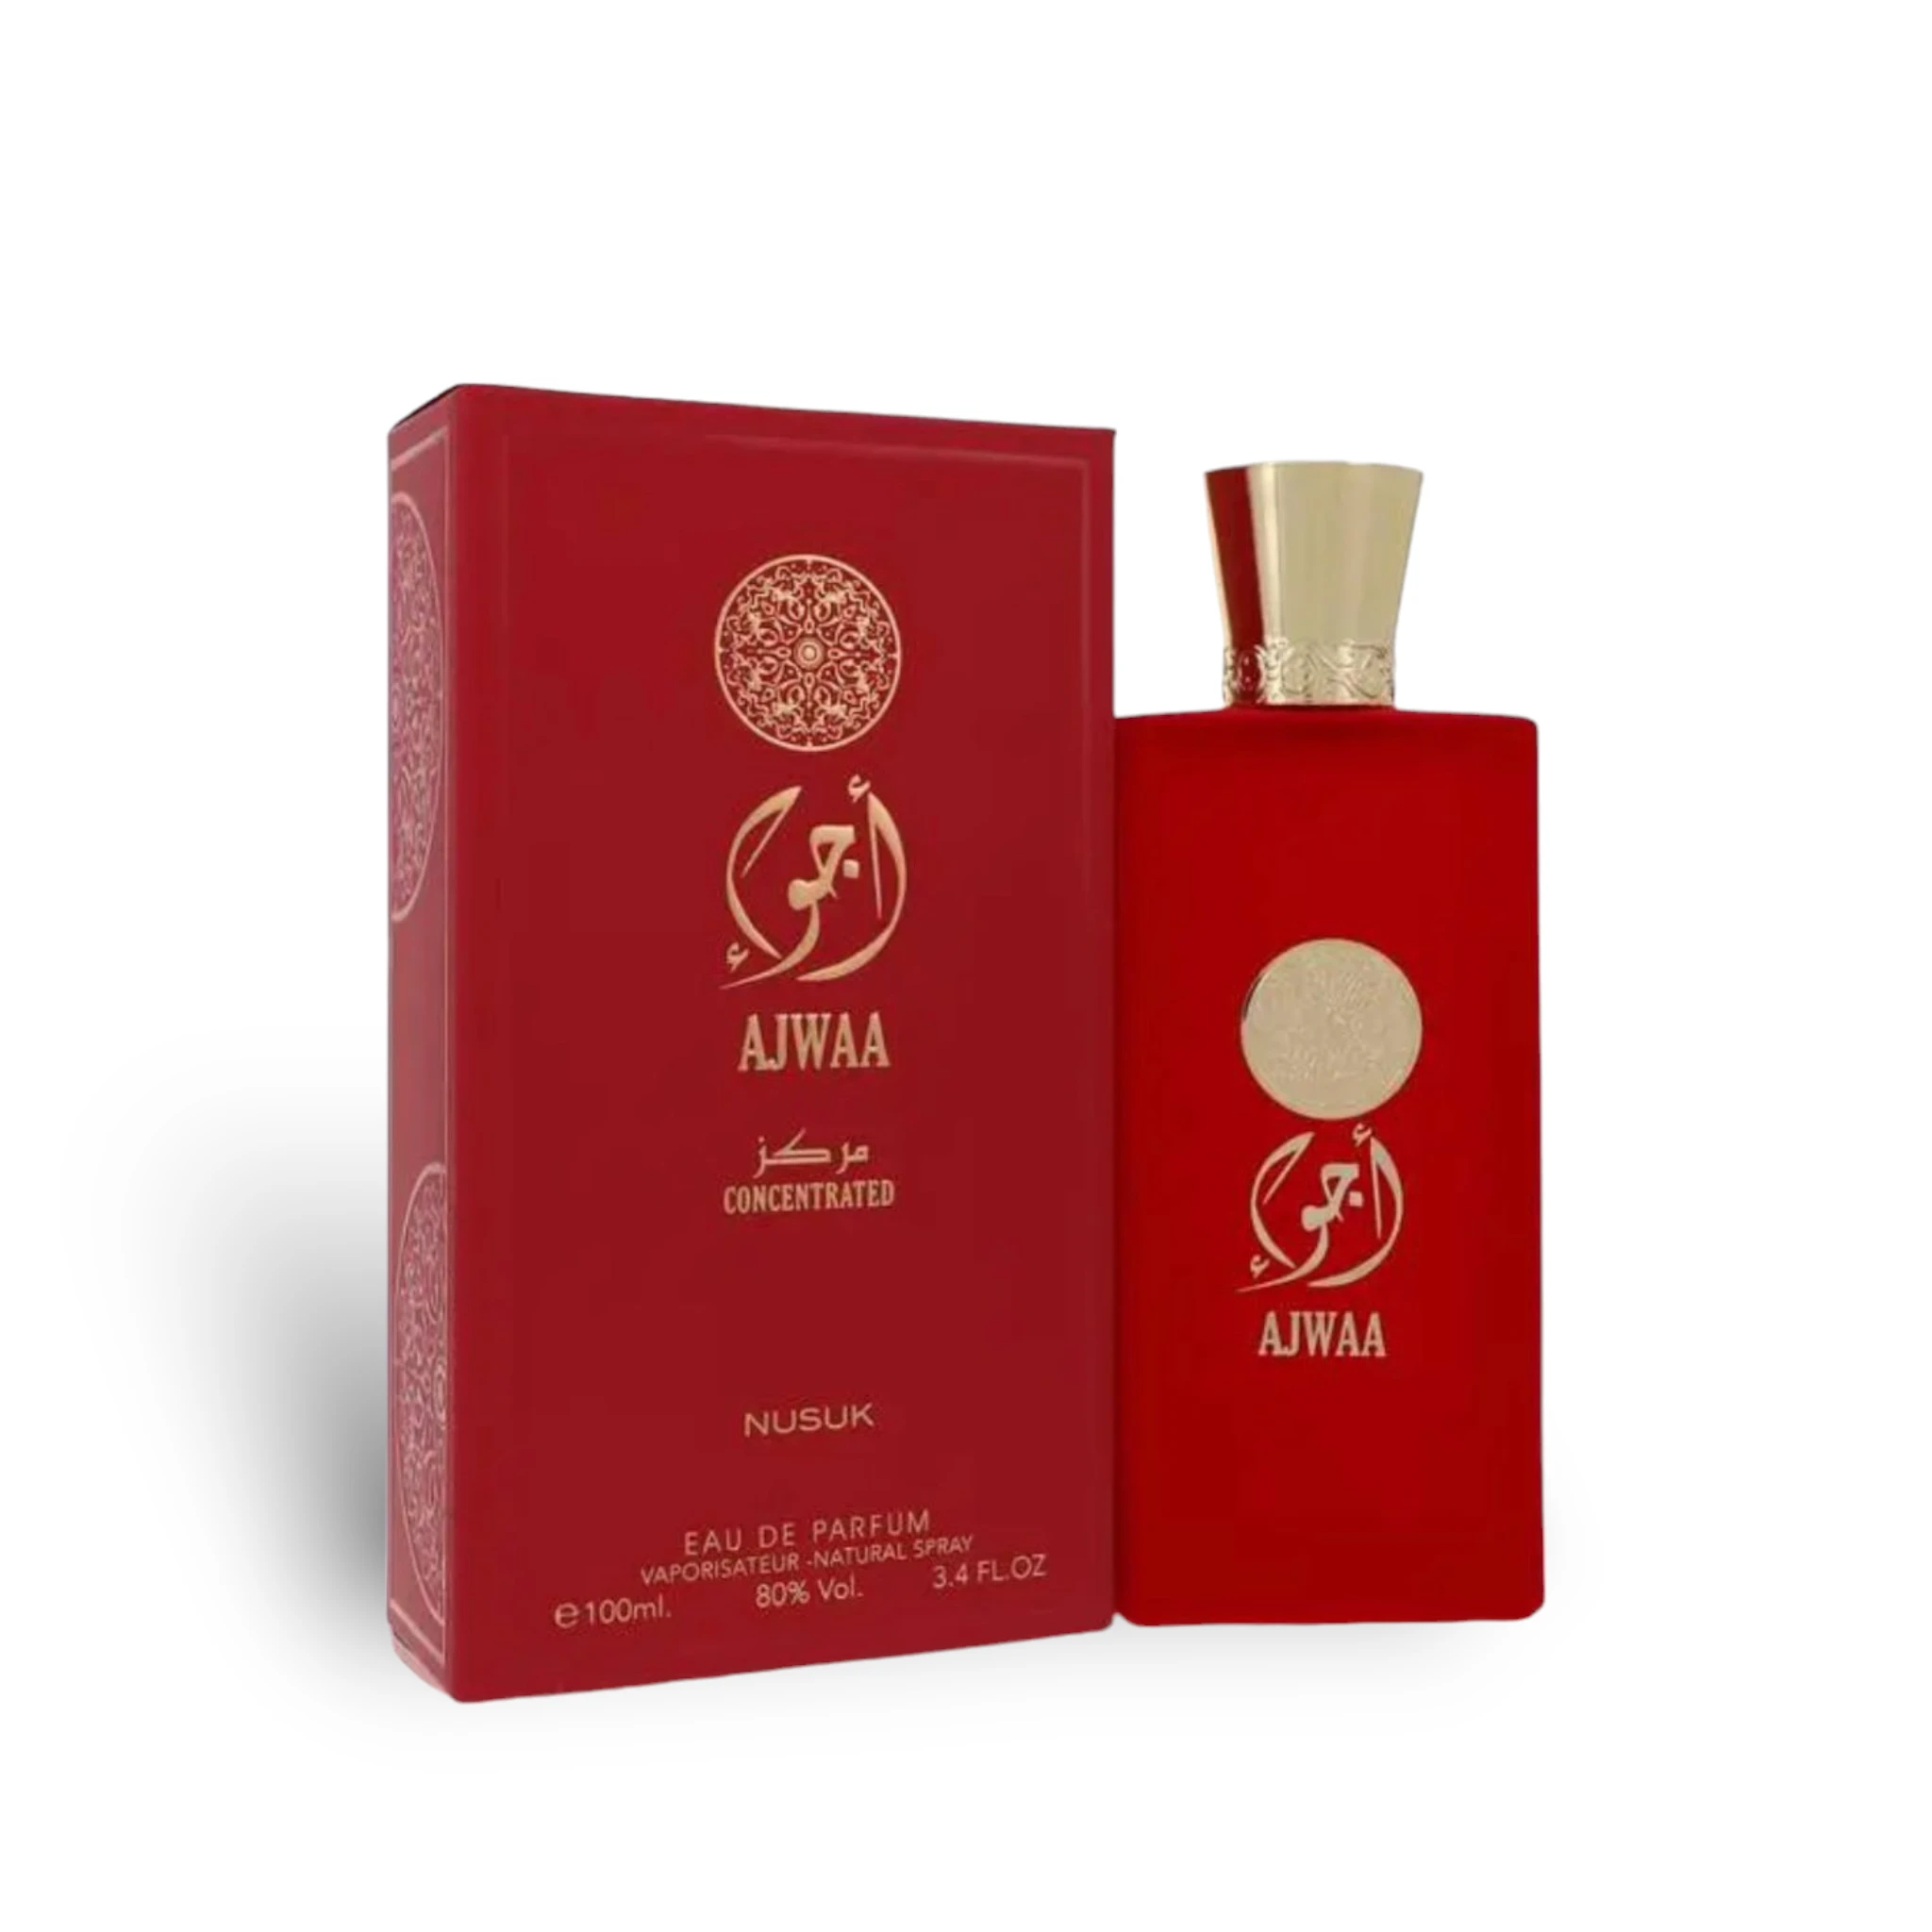 Ajwaa Concentrated Perfume / Eau De Parfum 100Ml Edp By Nusuk